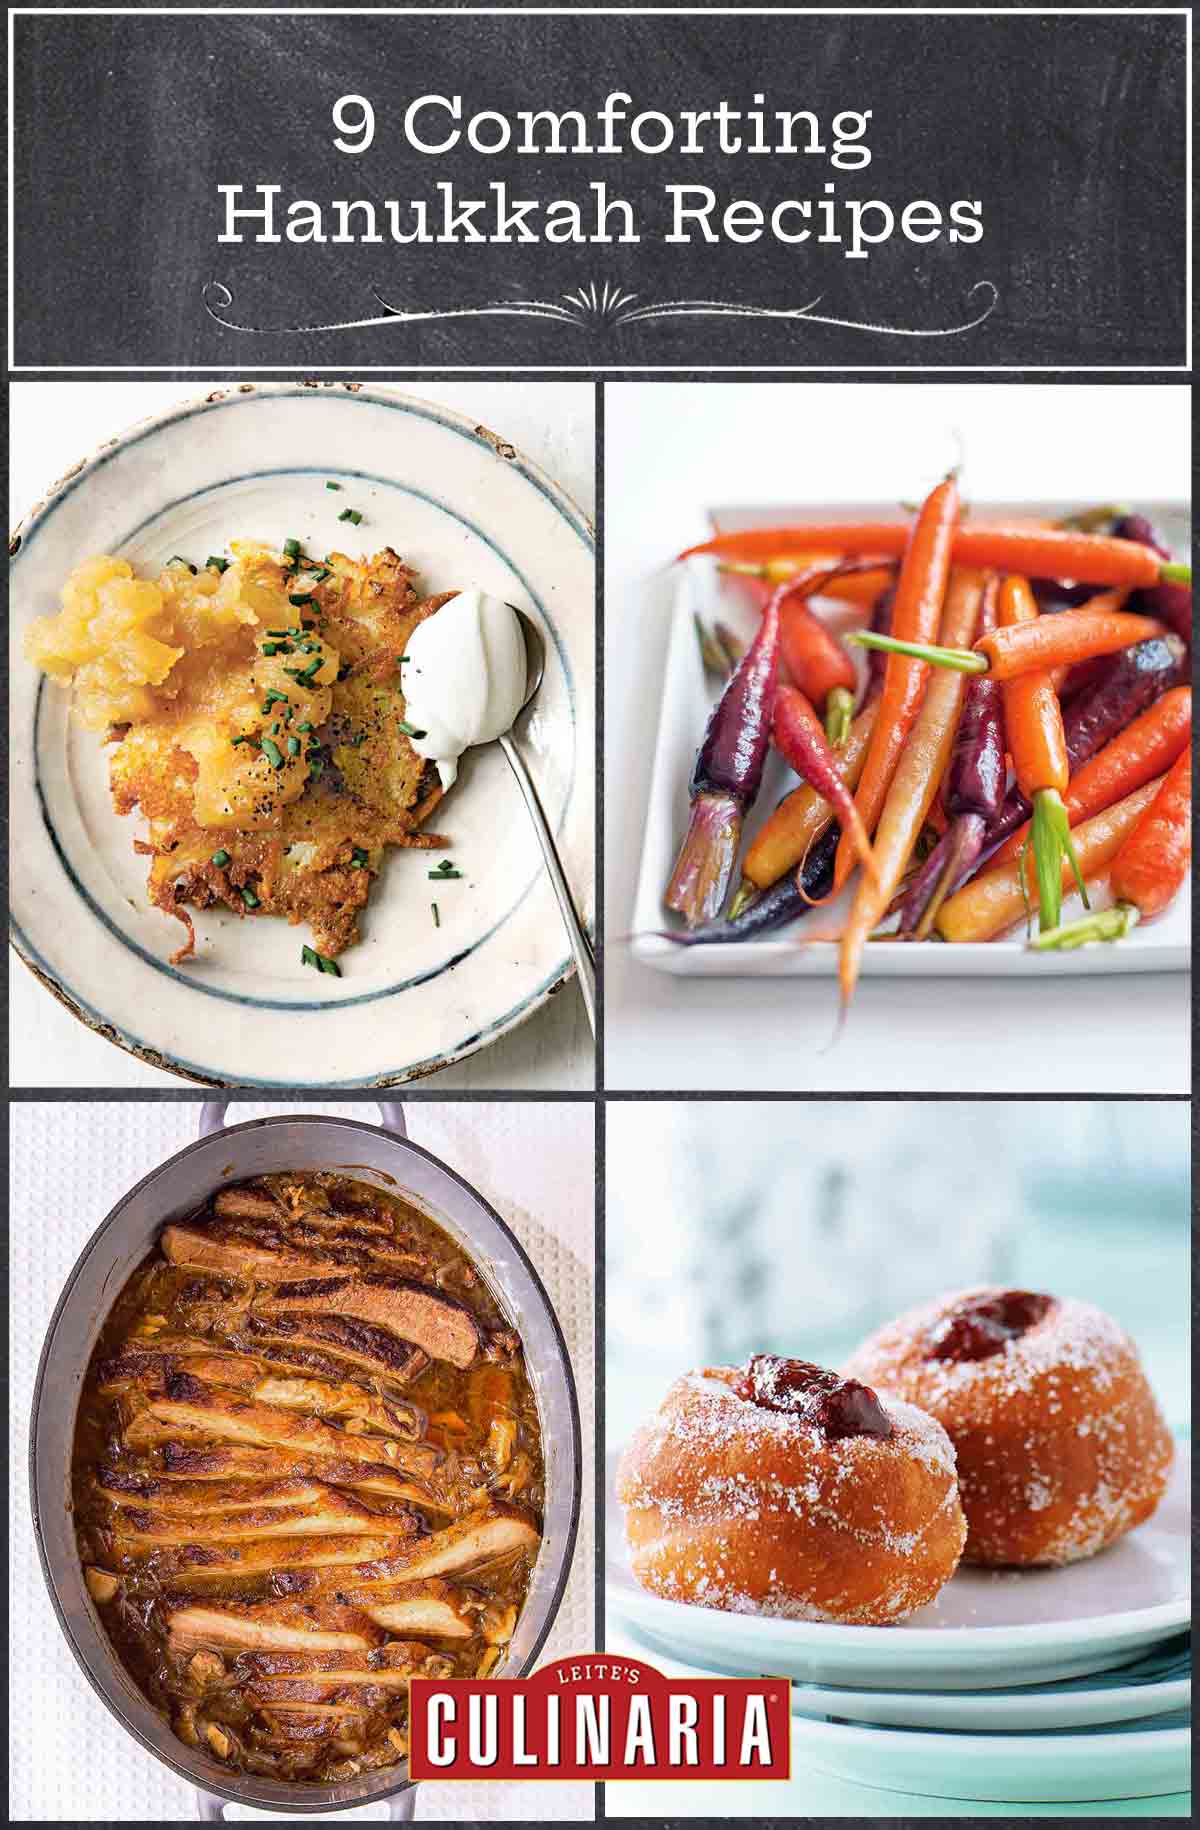 Four plates: potato latkes, candied carrots, brisket, and jelly doughnuts.